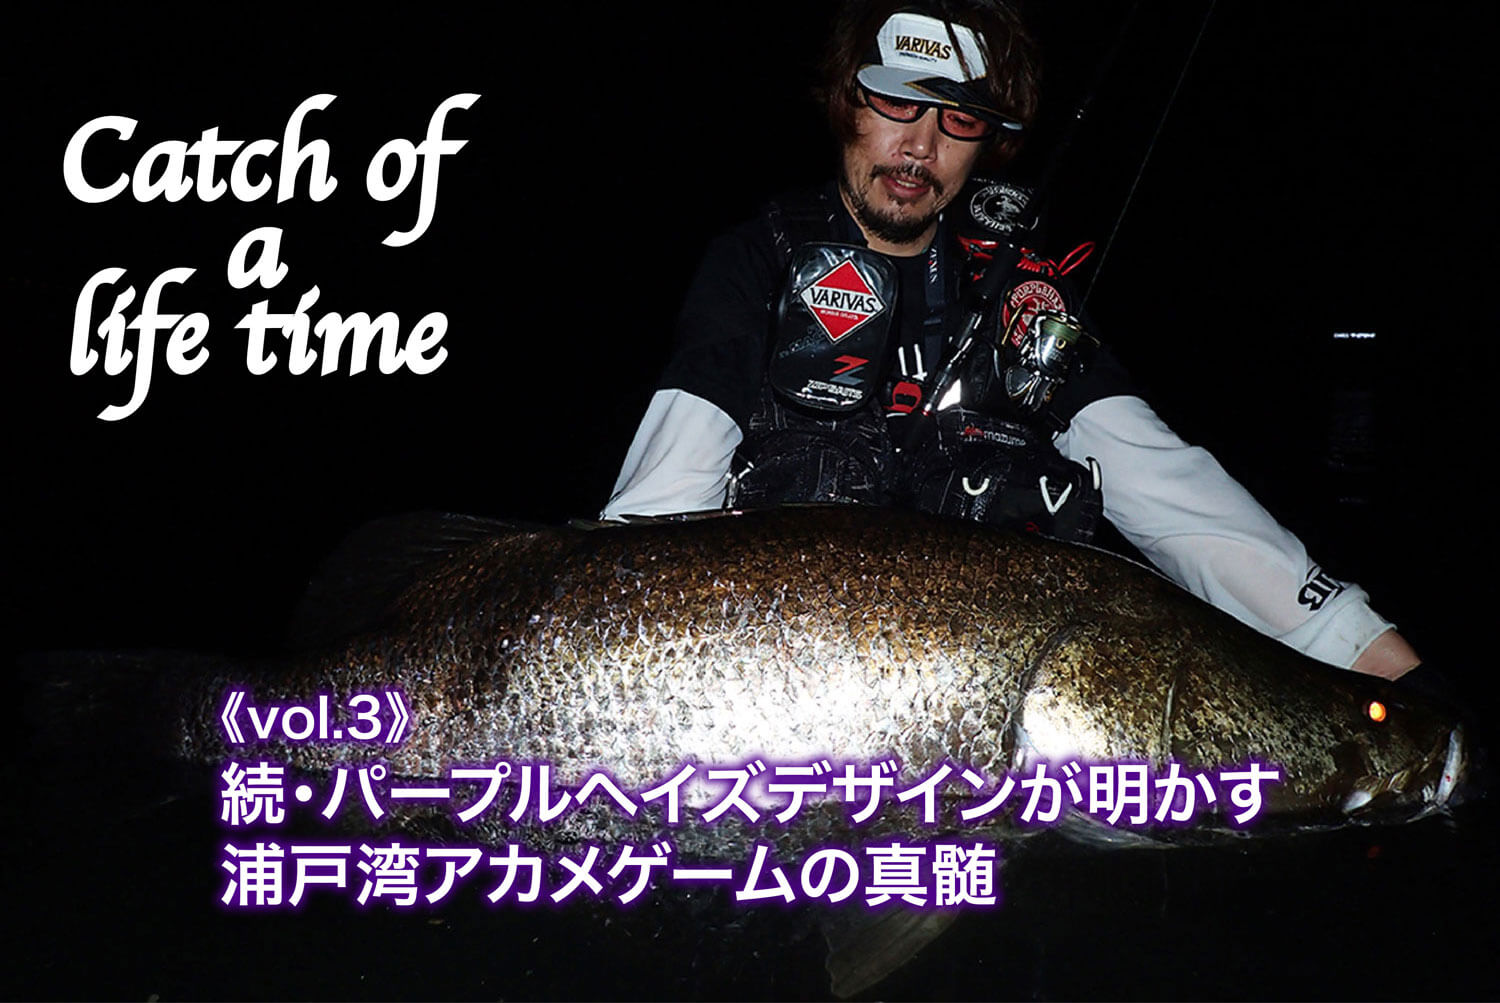 Catch Of A Life Time Vol 3 続 パープルヘイズデザインが明かす浦戸湾アカメゲームの真髄 Sw 釣り人のためのメディア